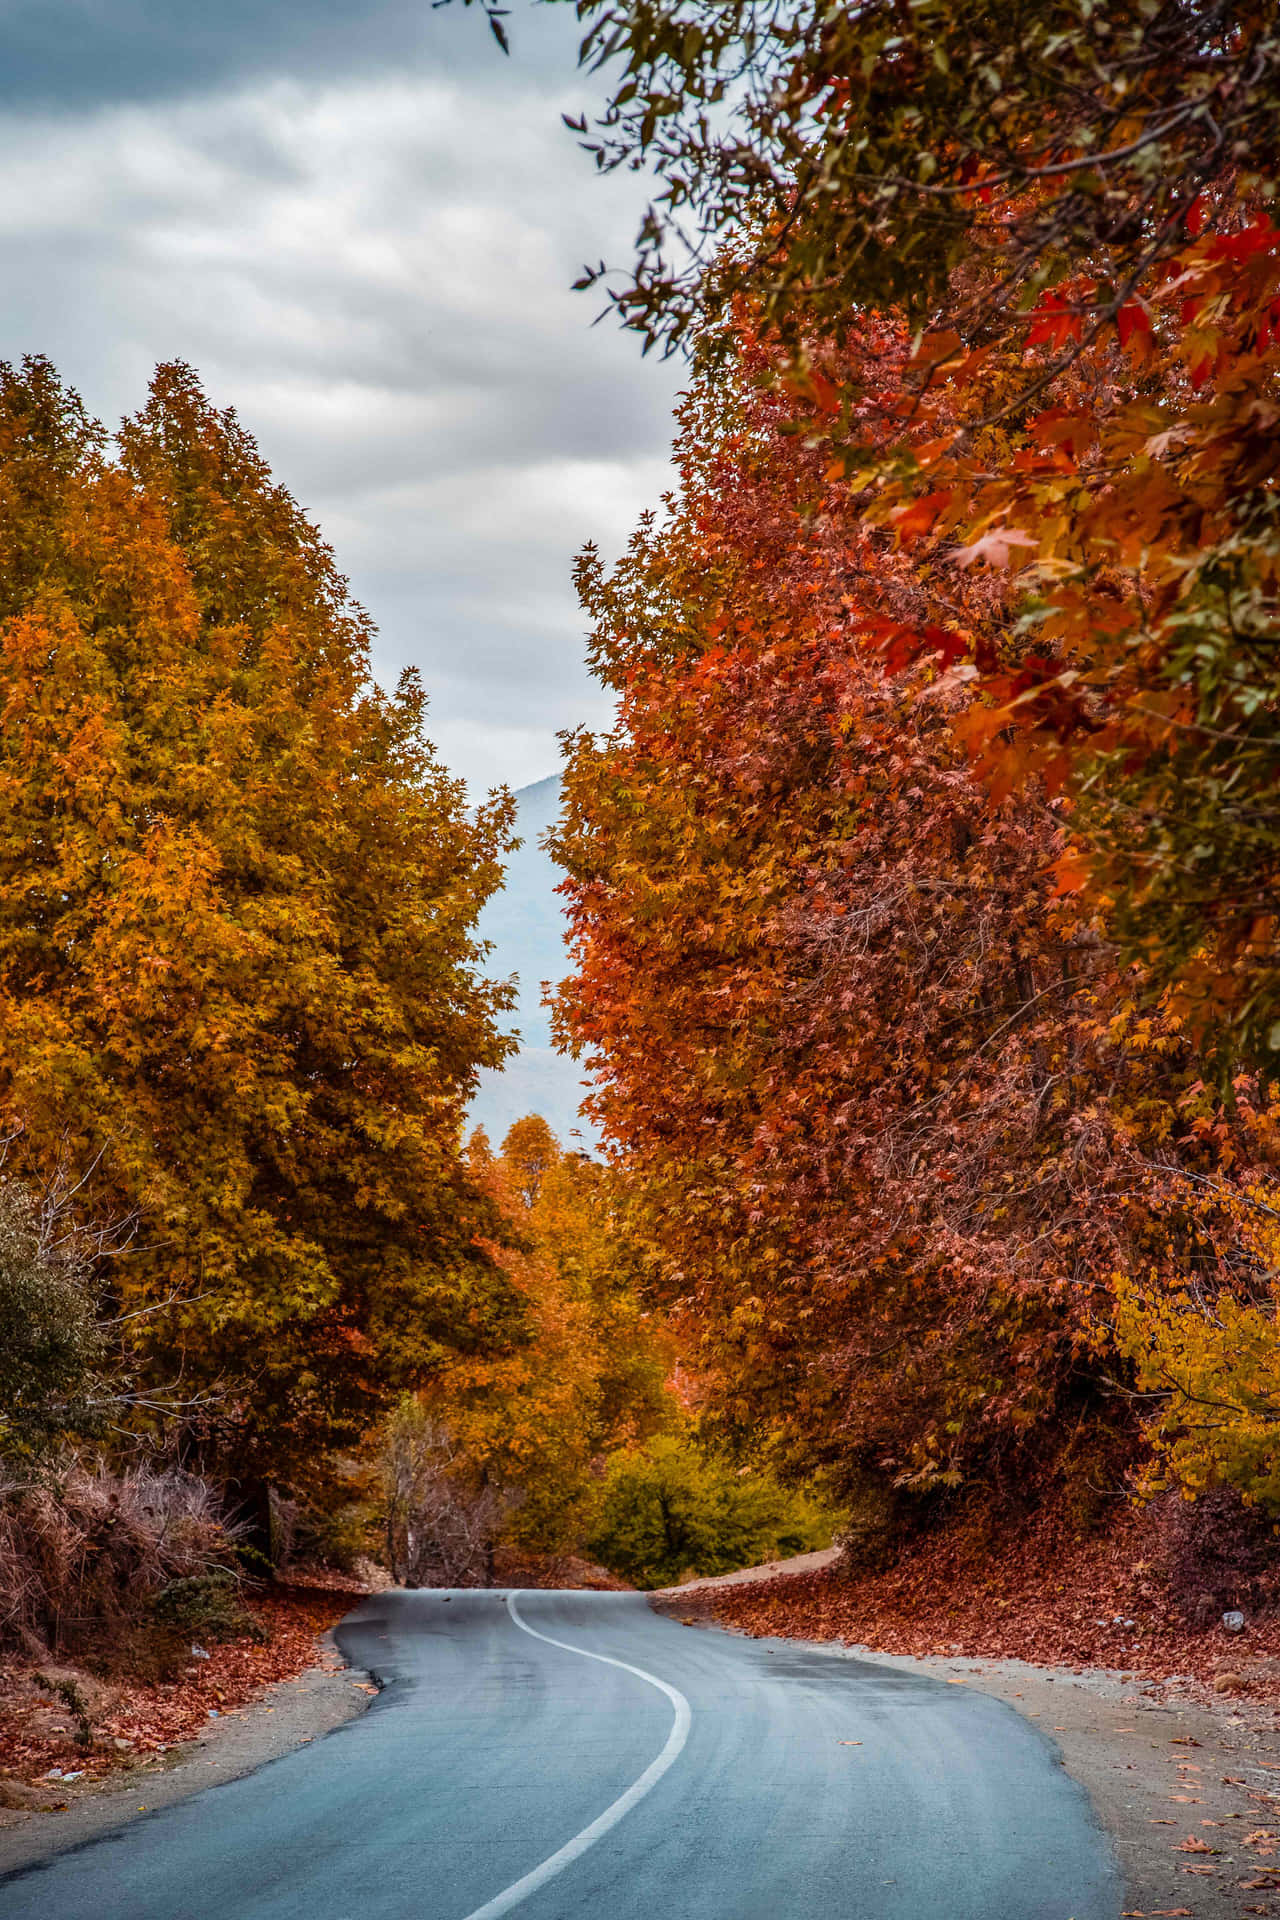 Autumn Elegance - Breath-taking Fall Scenery